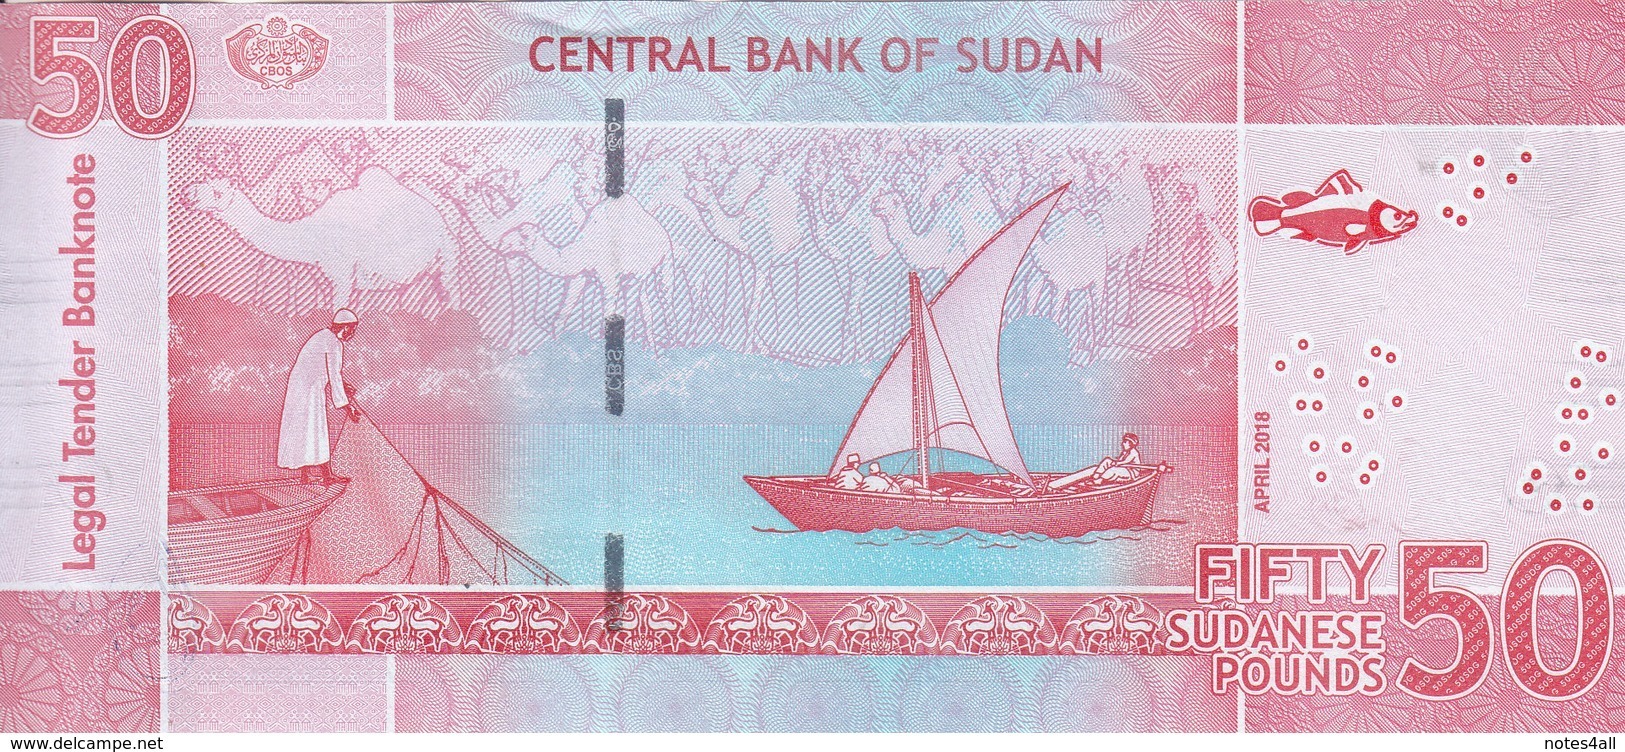 SUDAN 50 POUNDS 2018 P-NEW REPLACEMENT UNC */* - Sudan